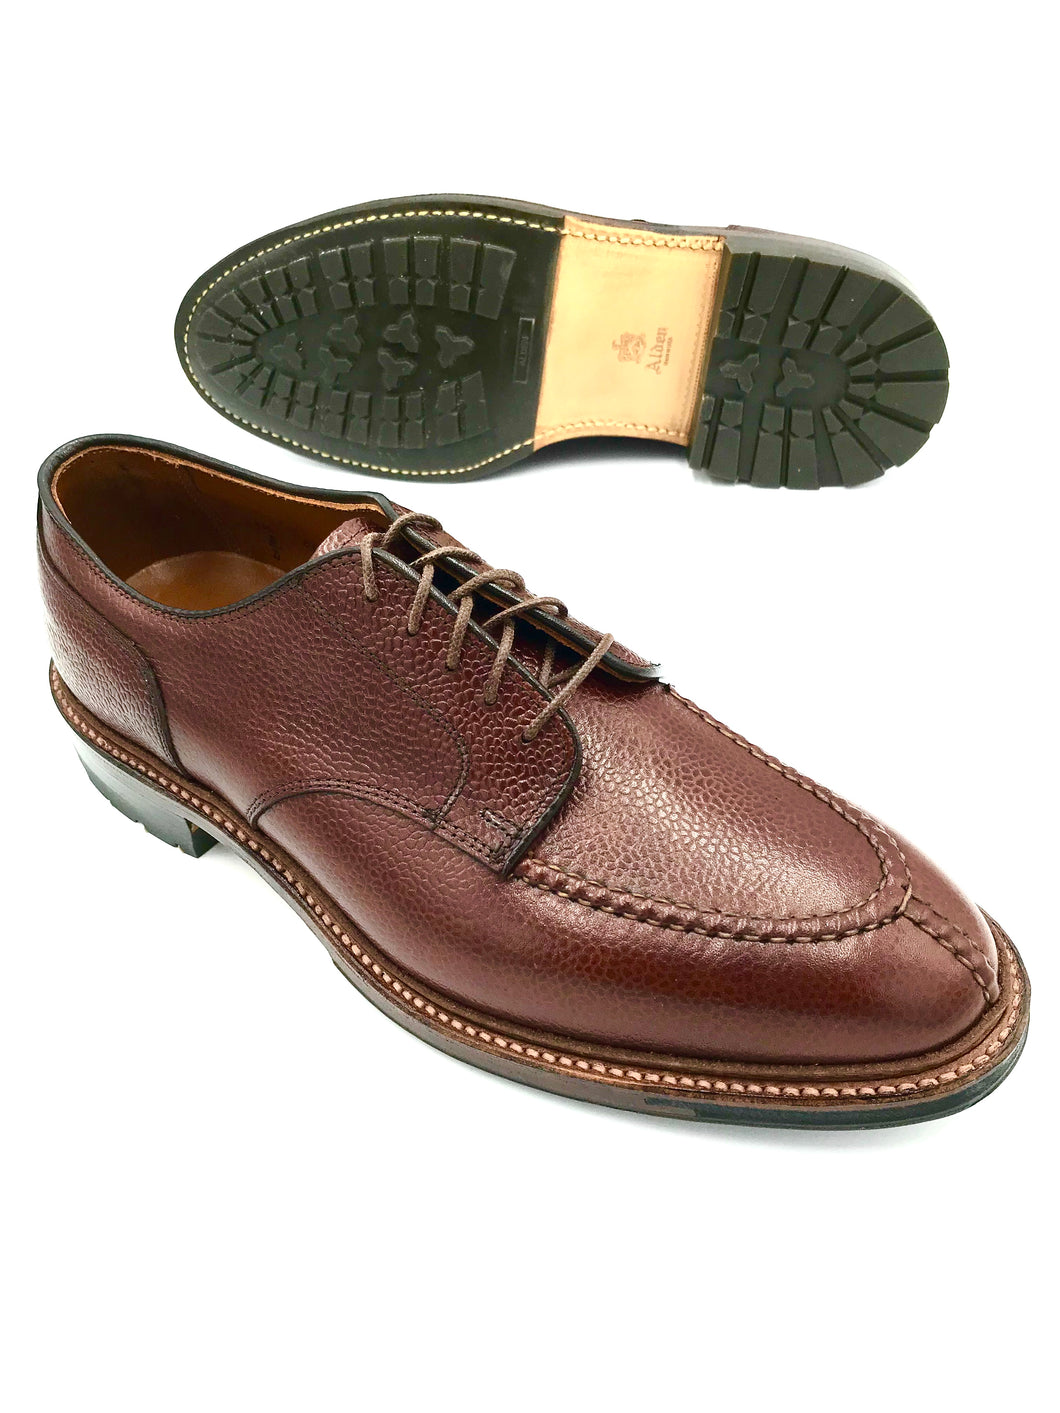 LaRossa Shoe and Alden special Norwegian make up D9604 in brown scotch grain.